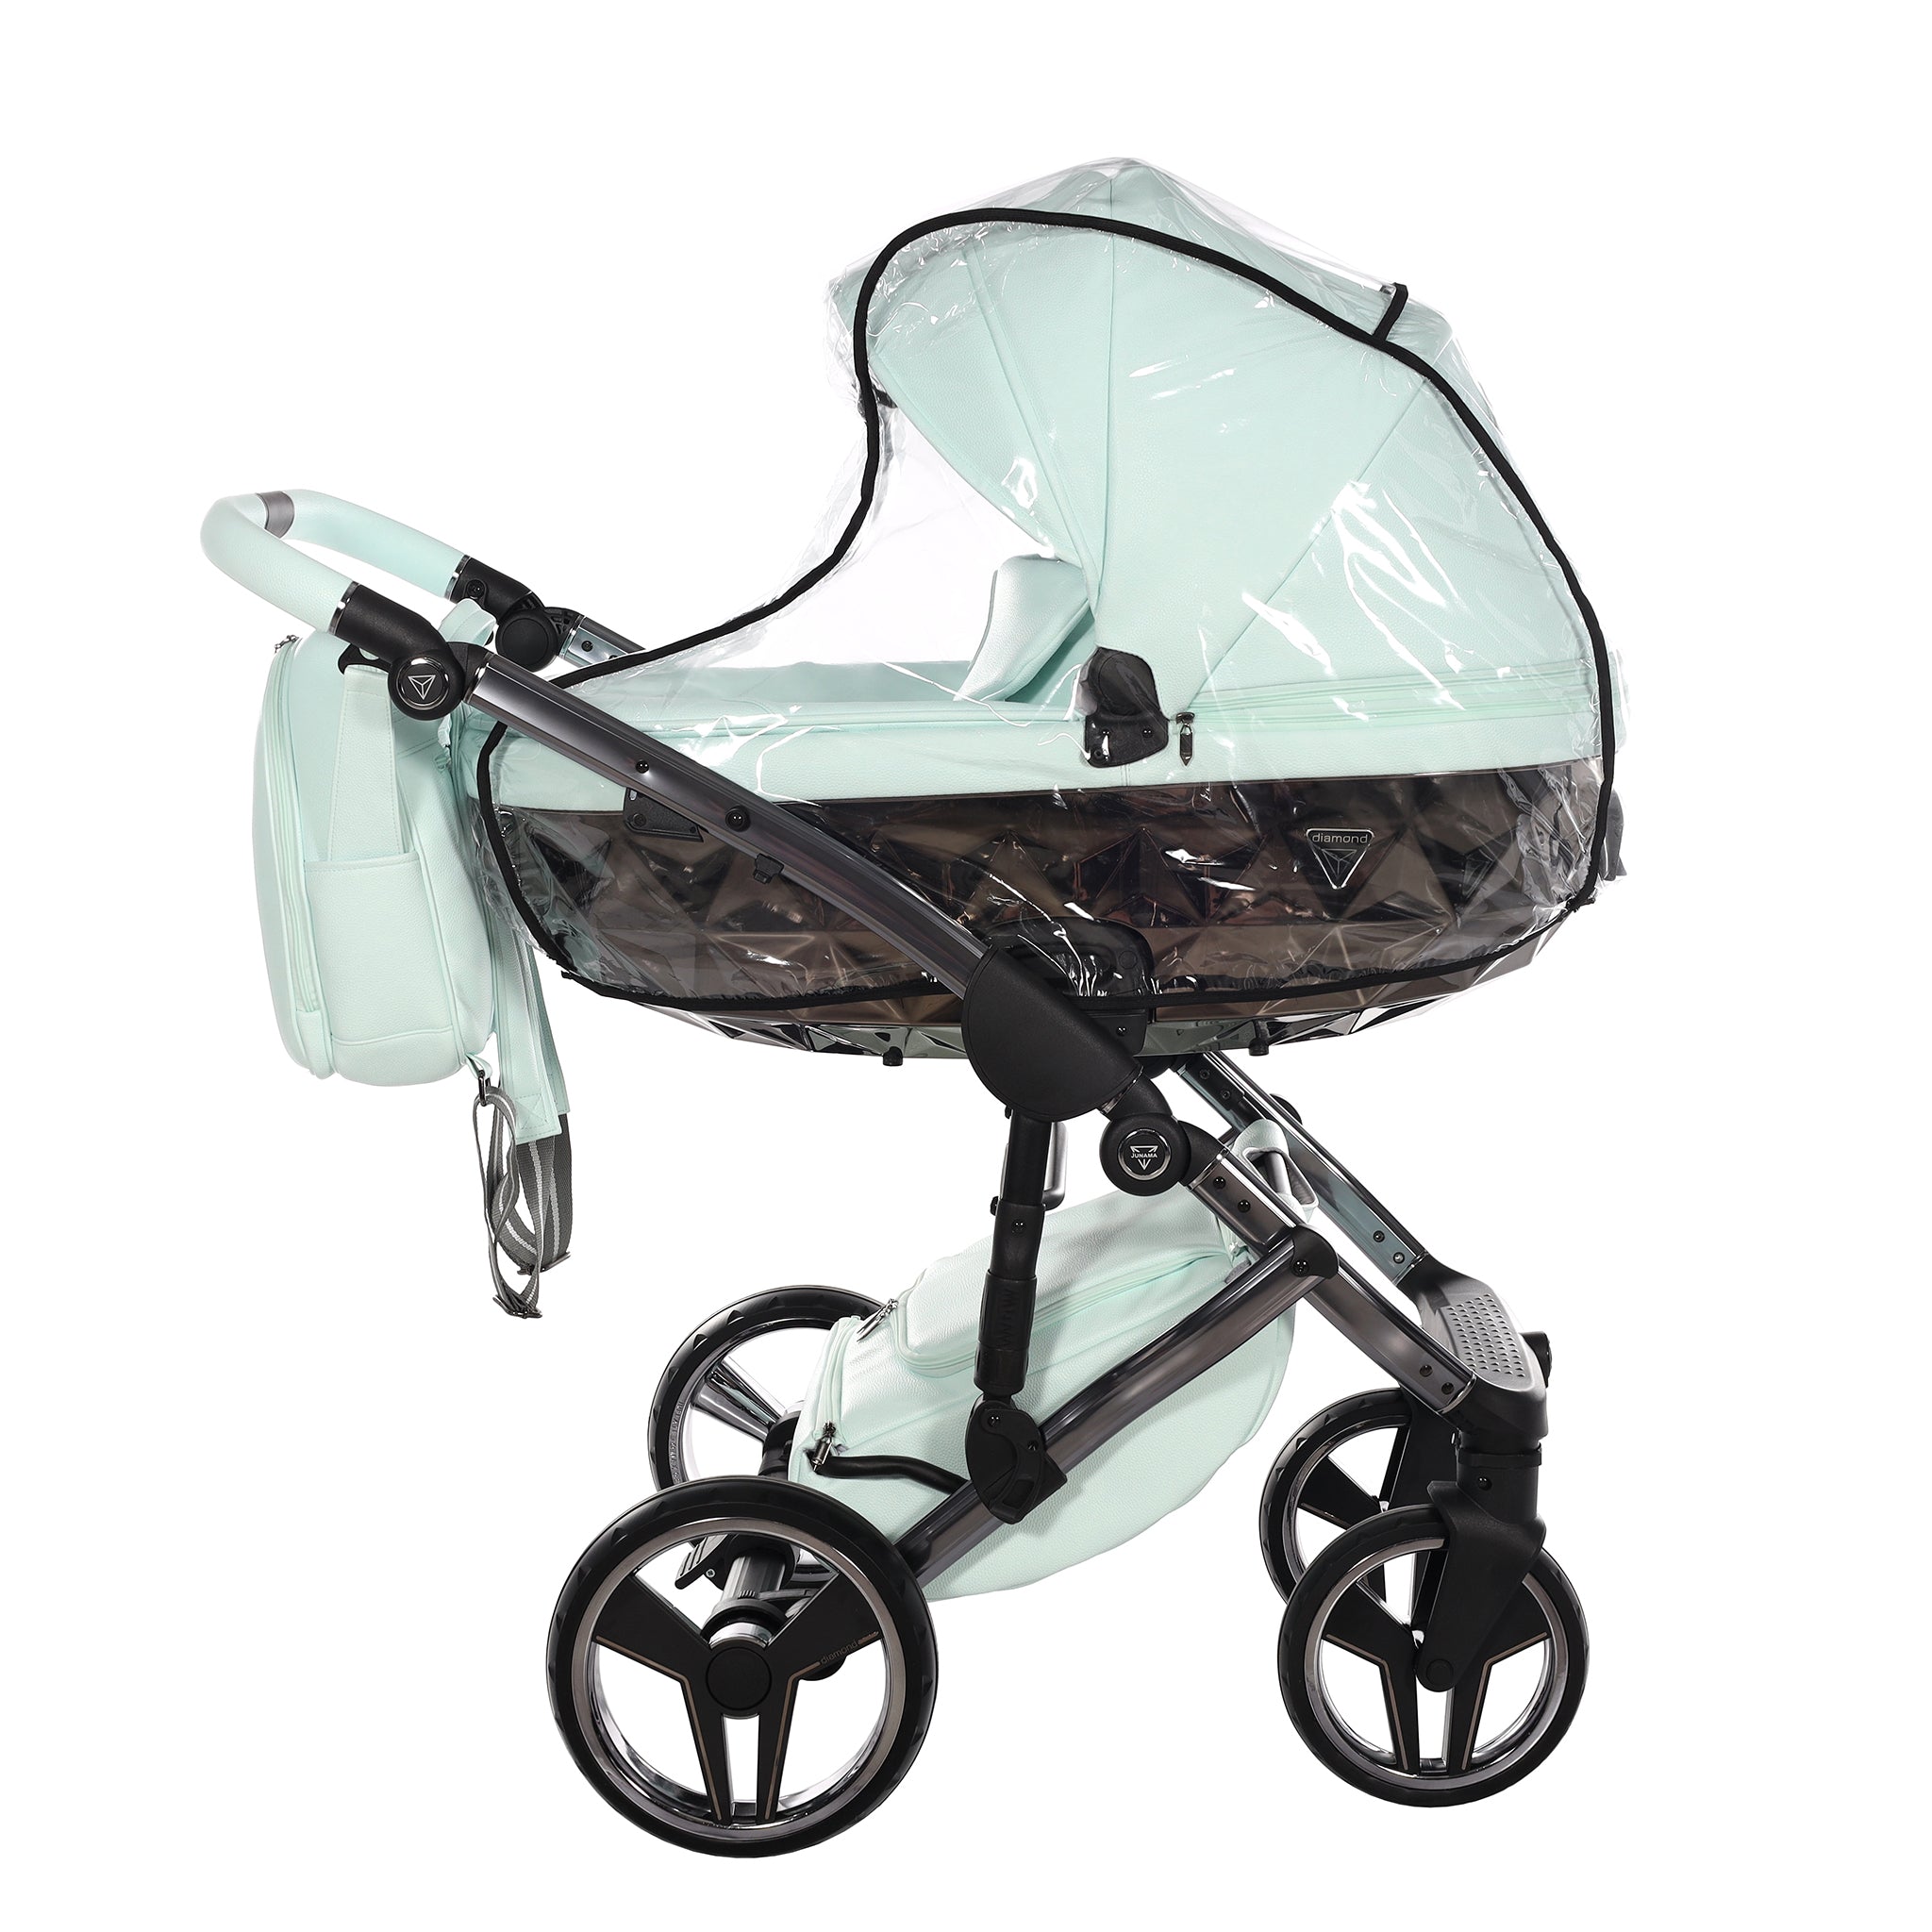 Junama Handcraft, baby prams or stroller 2 in 1 - Black Chrome and Light Blue, Code number: JUNHC01